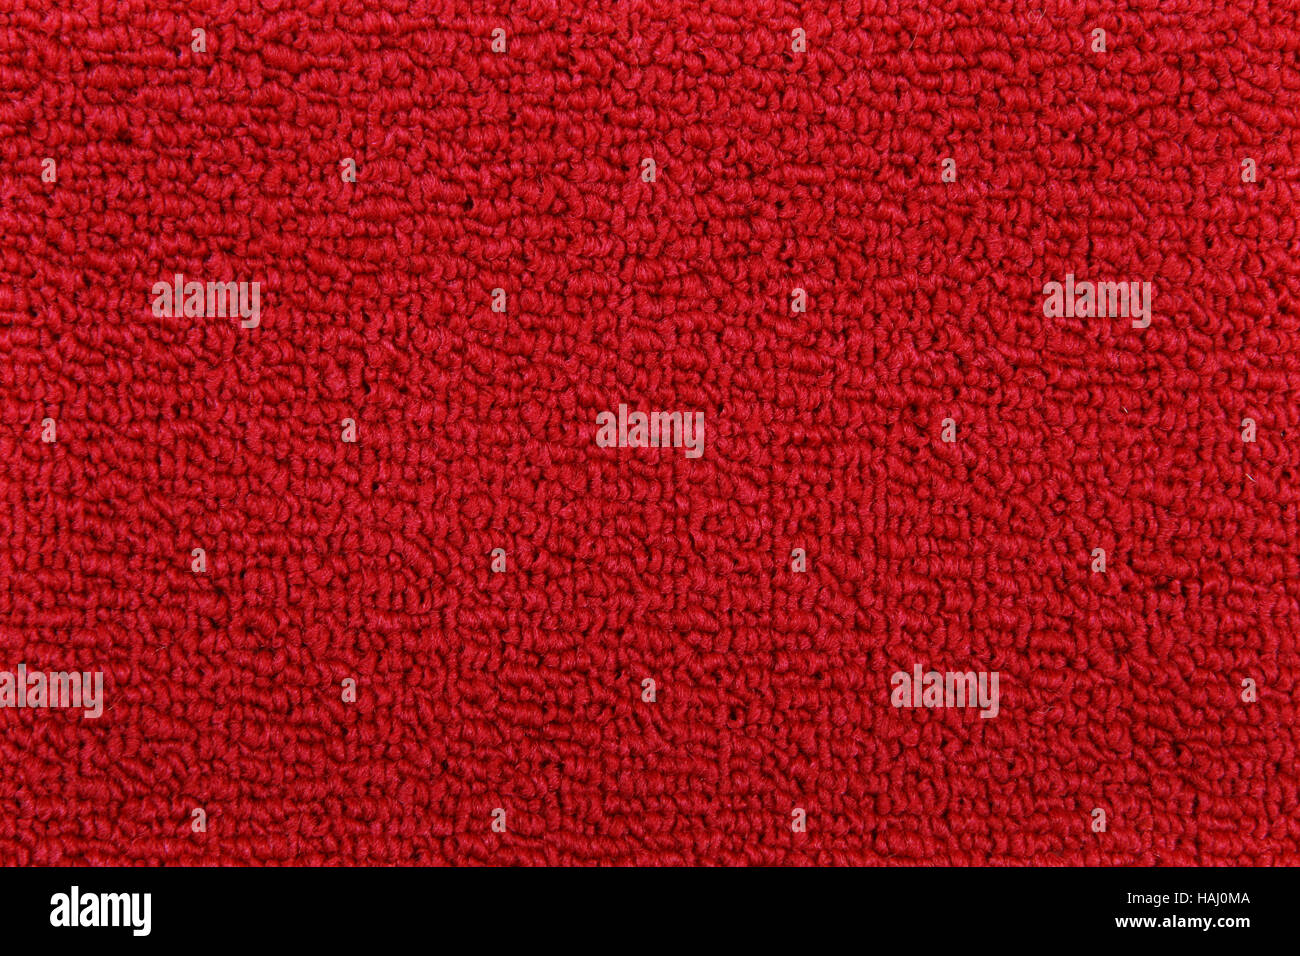 Red carpet texture Stock Photo